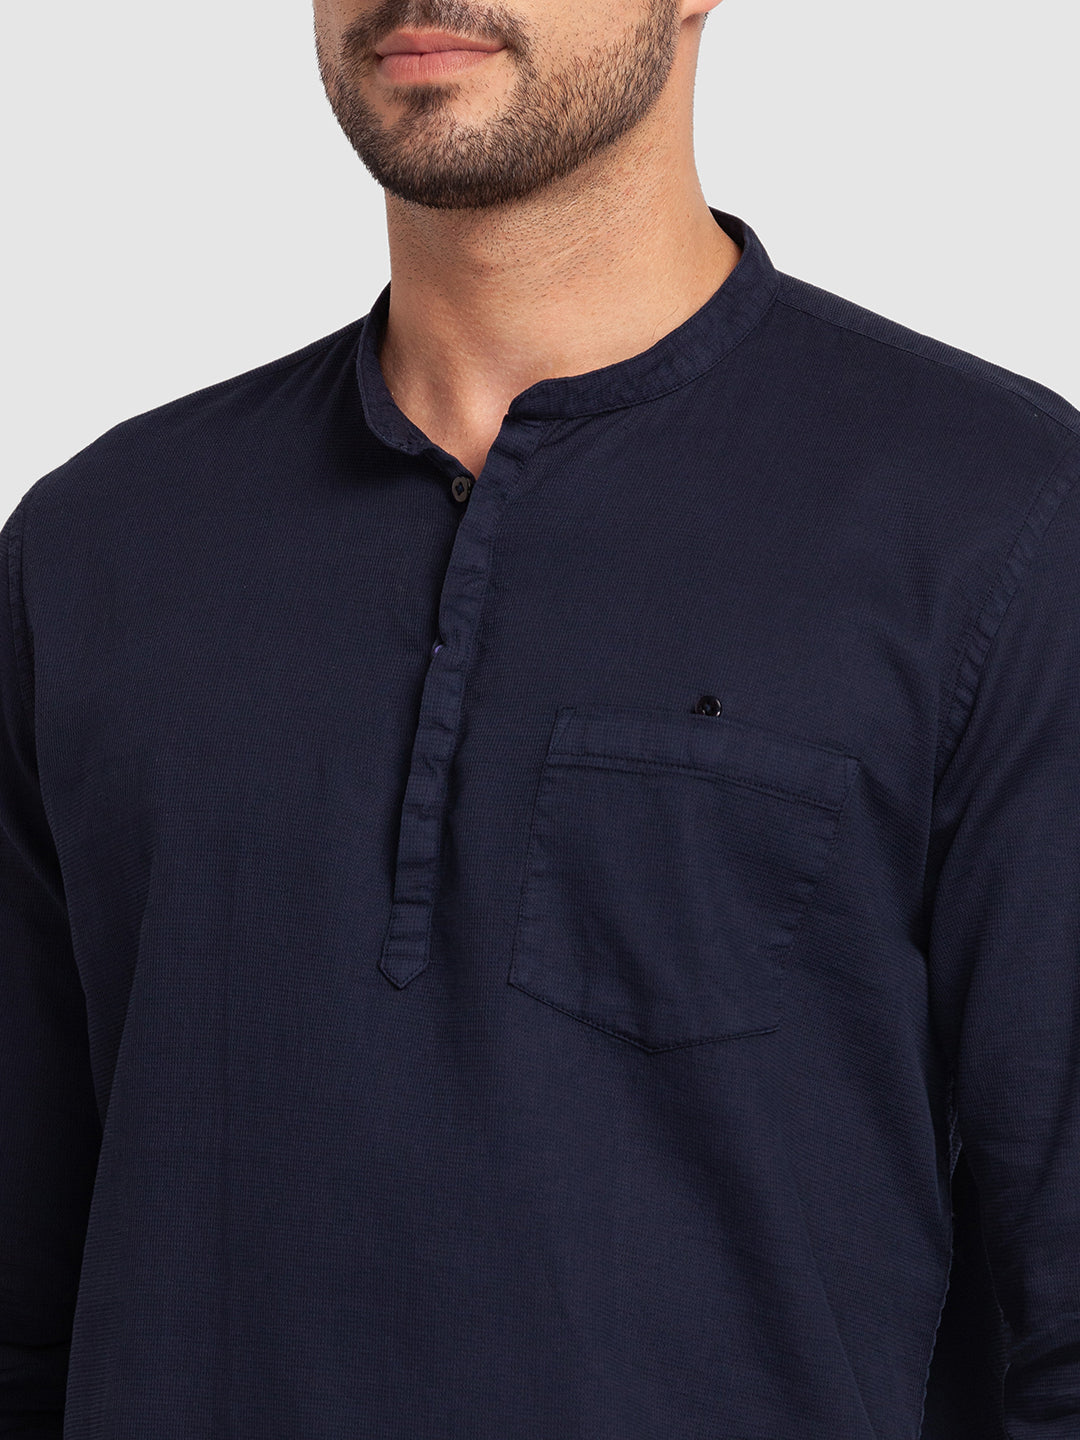 Spykar Navy Blue Cotton Full Sleeve Plain Shirt Kurta For Men